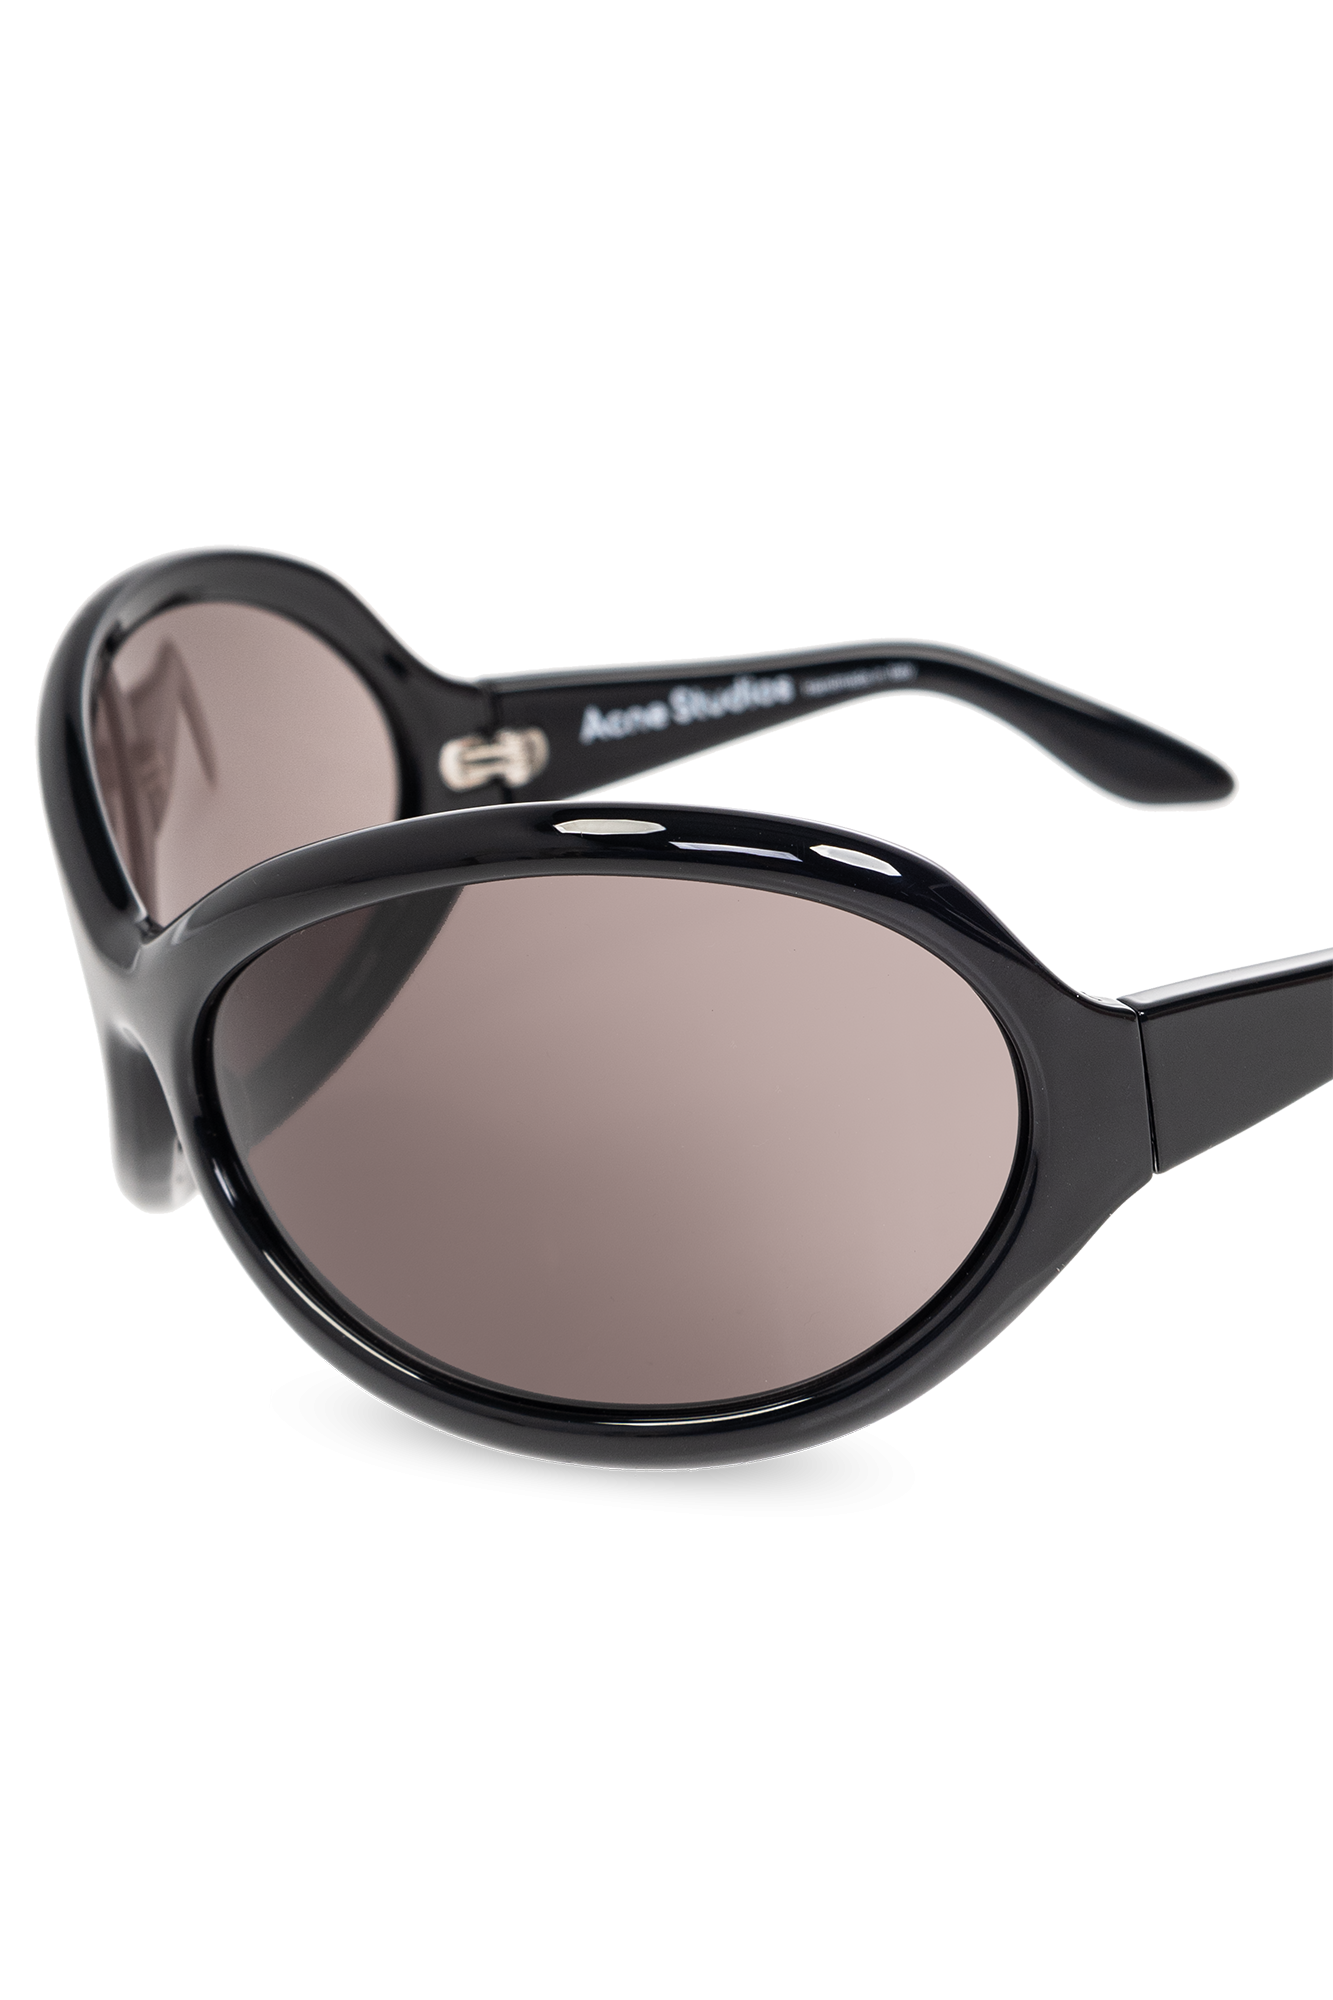 Acne Studios bottega veneta square frame tinted sunglasses